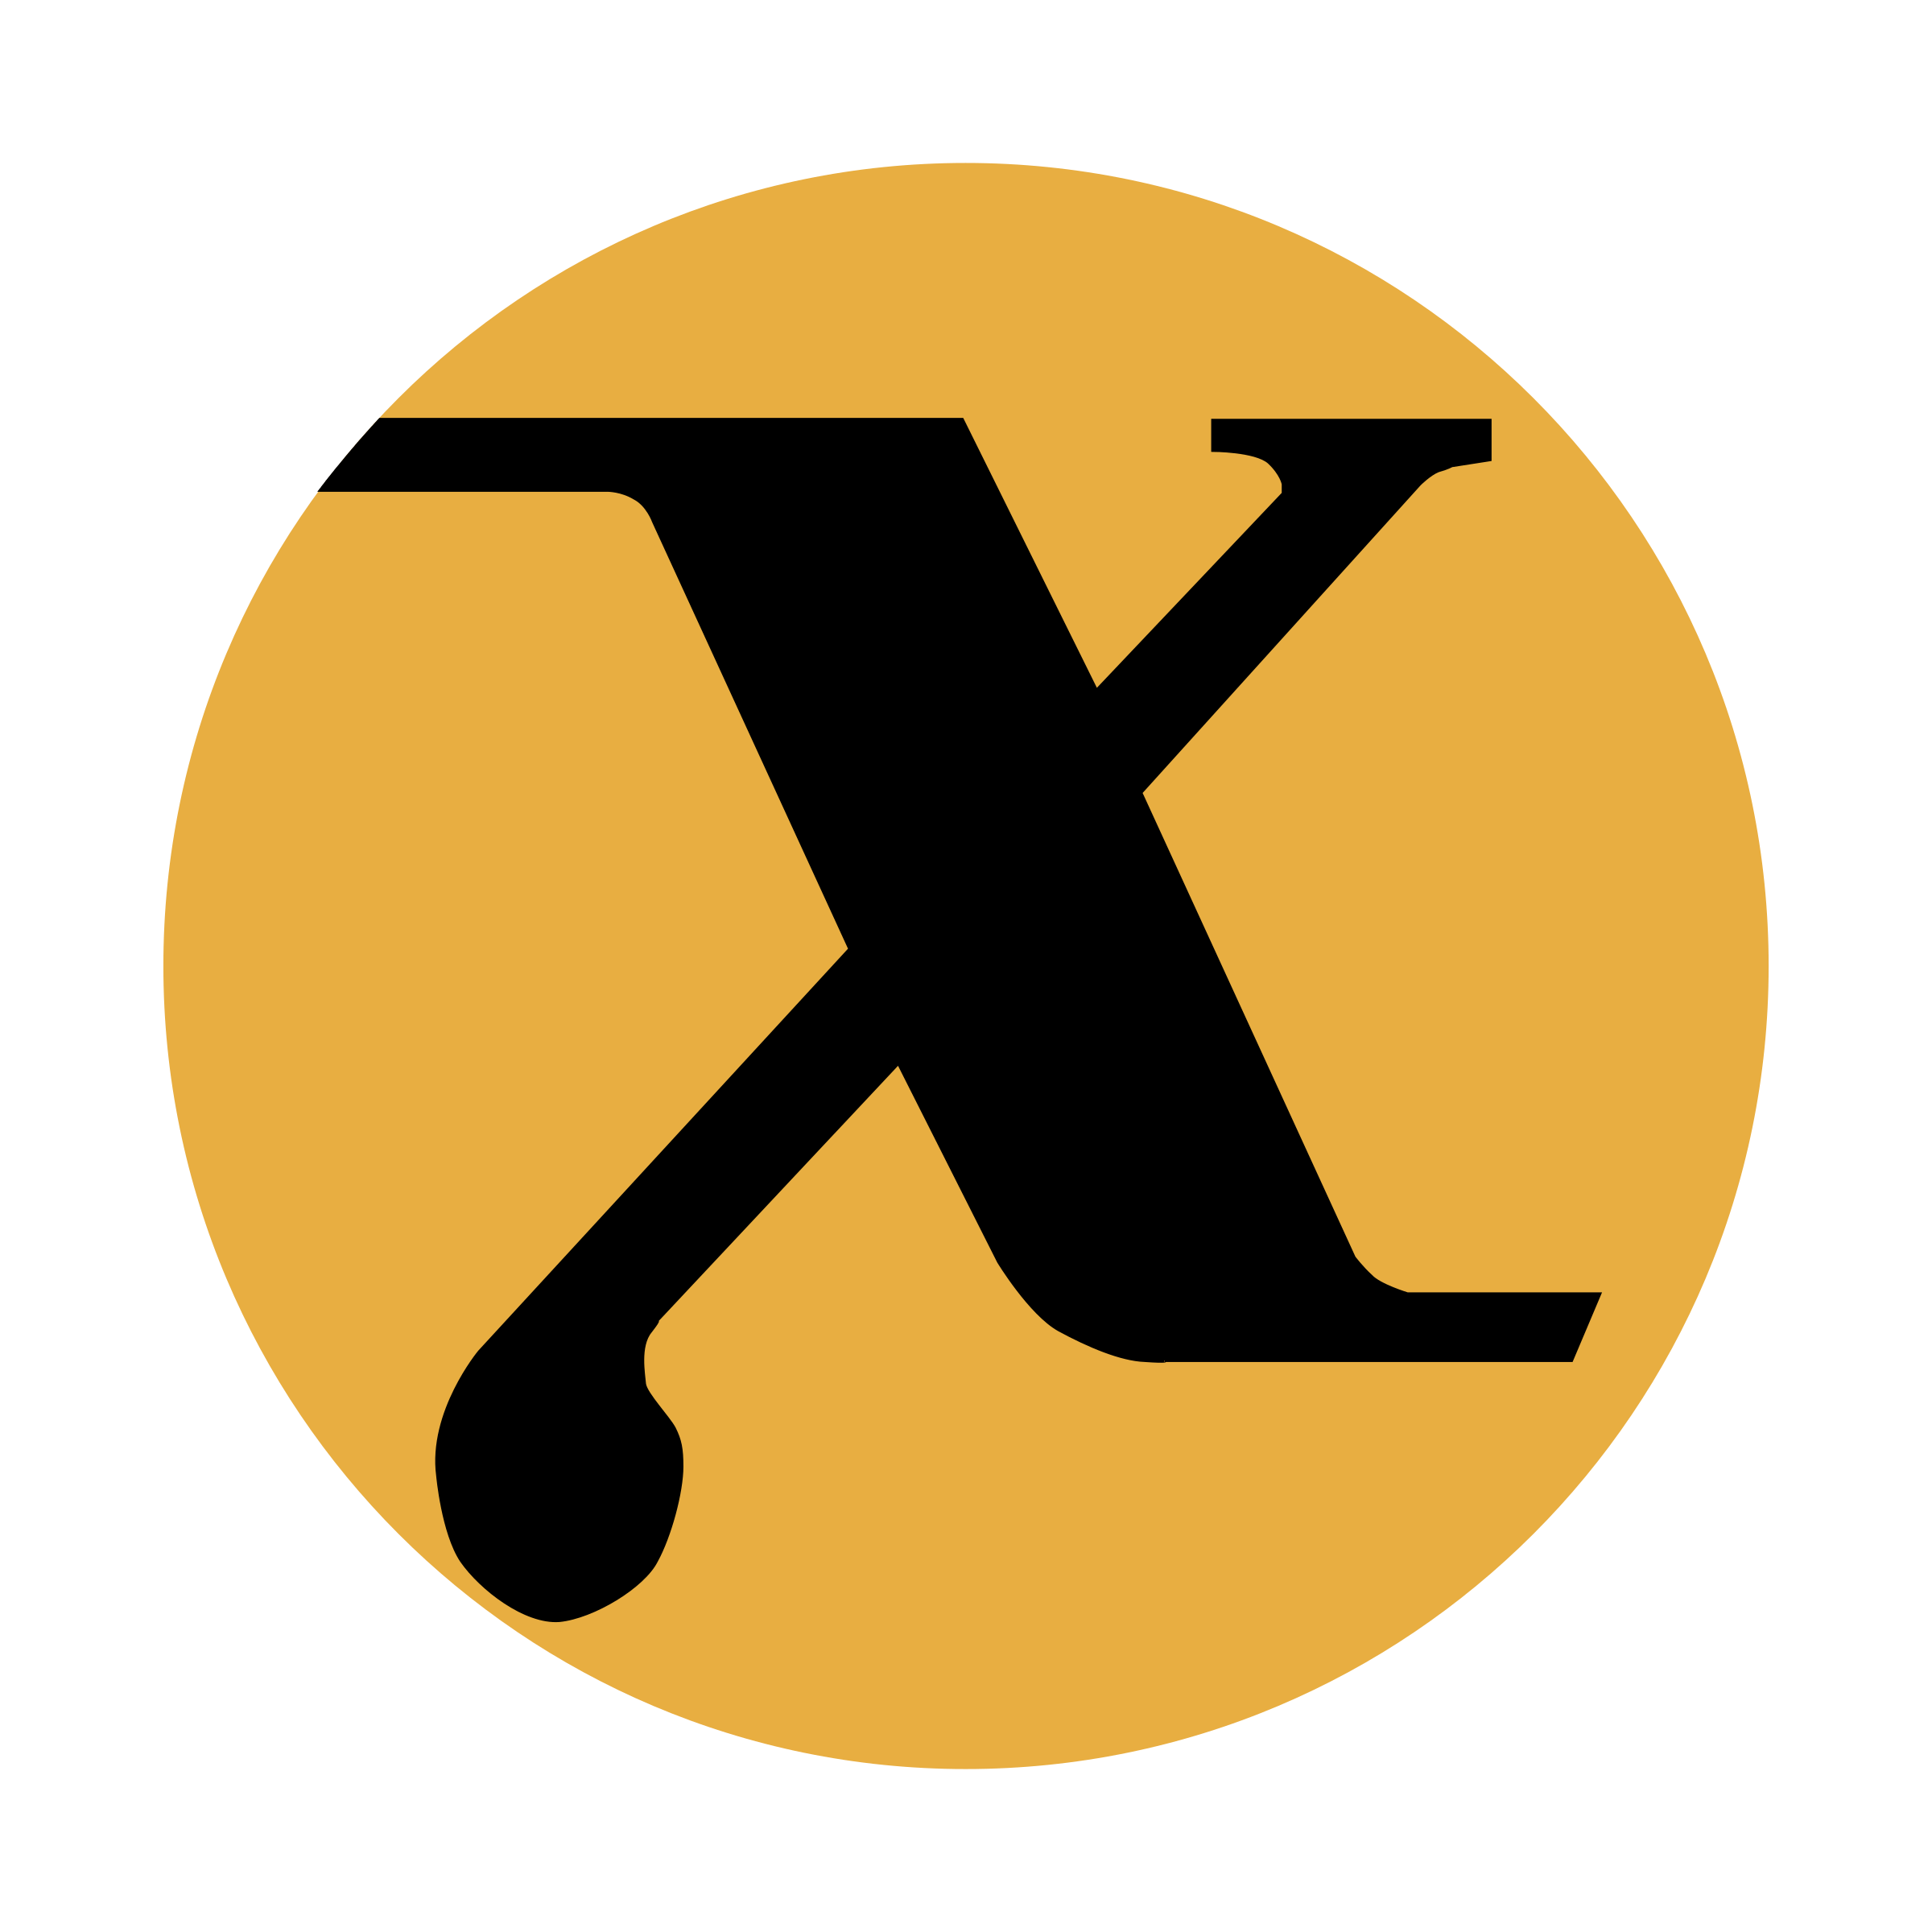 Unix Logo - UNIX Logo PNG Transparent & SVG Vector - Freebie Supply